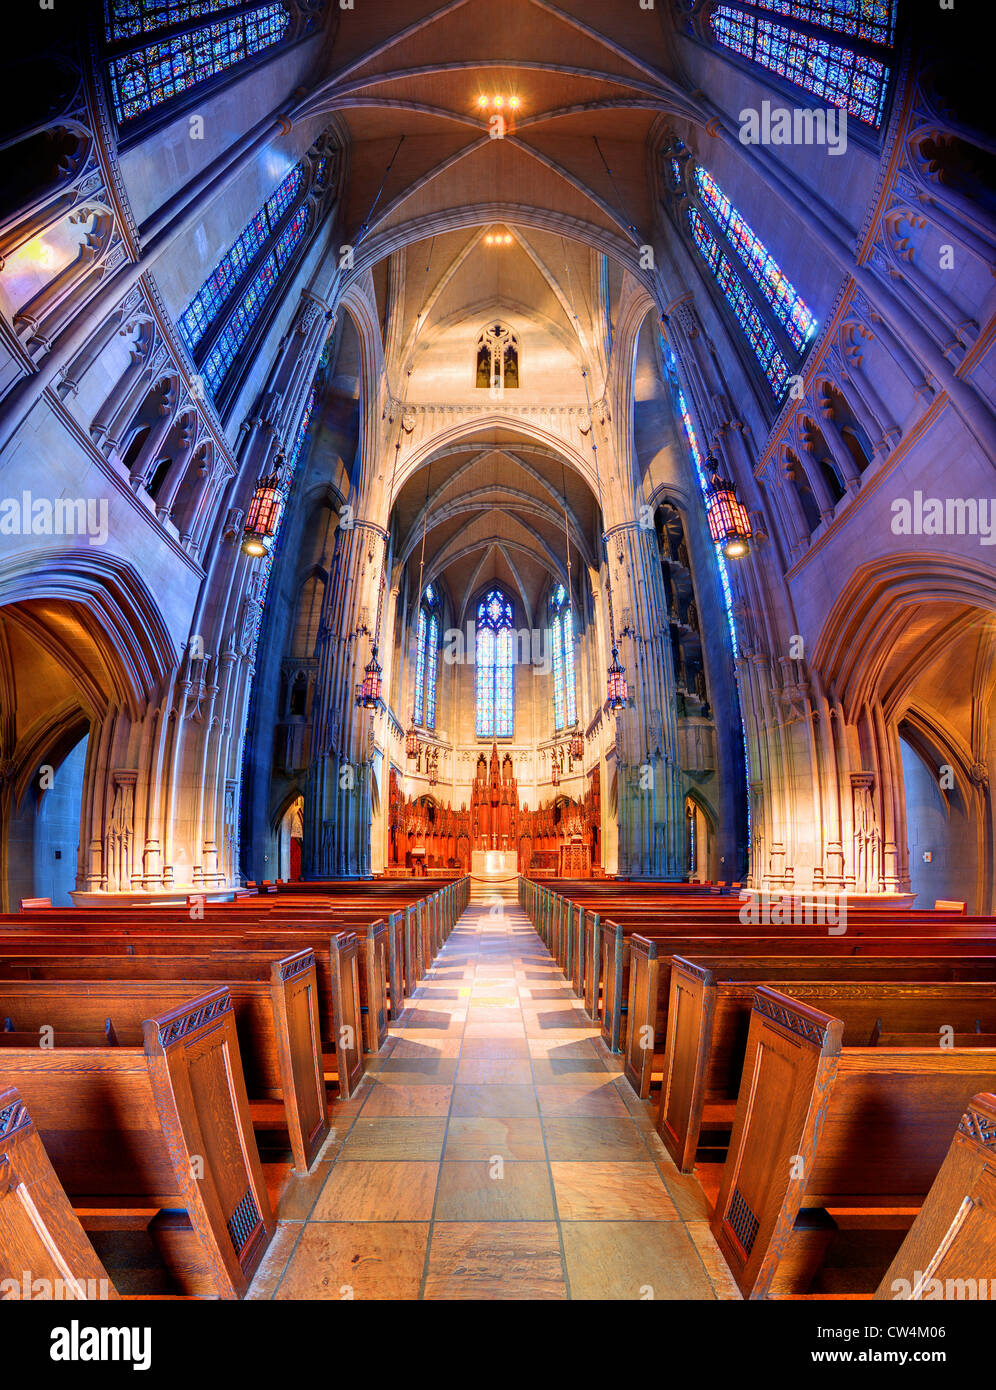 Interior of the interdenominational Heinz Chapel in Pittsburgh, Pennsylvania, USA. Stock Photo